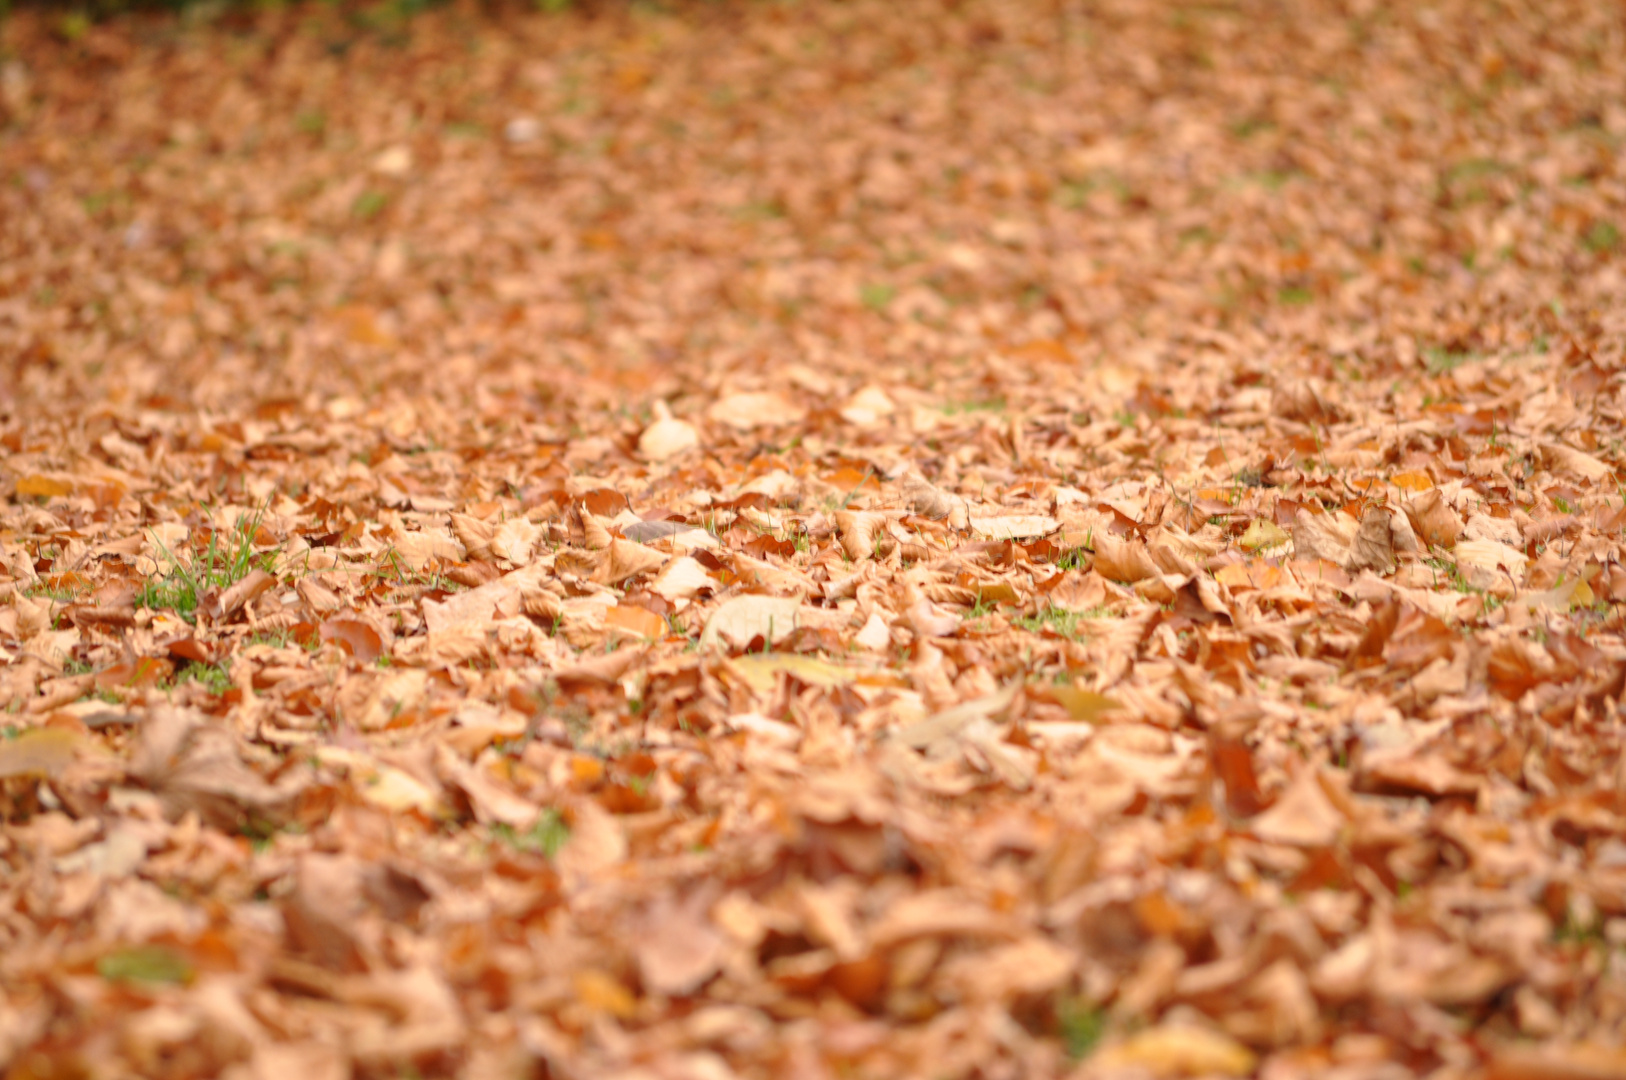 Herbst im Herzogspark